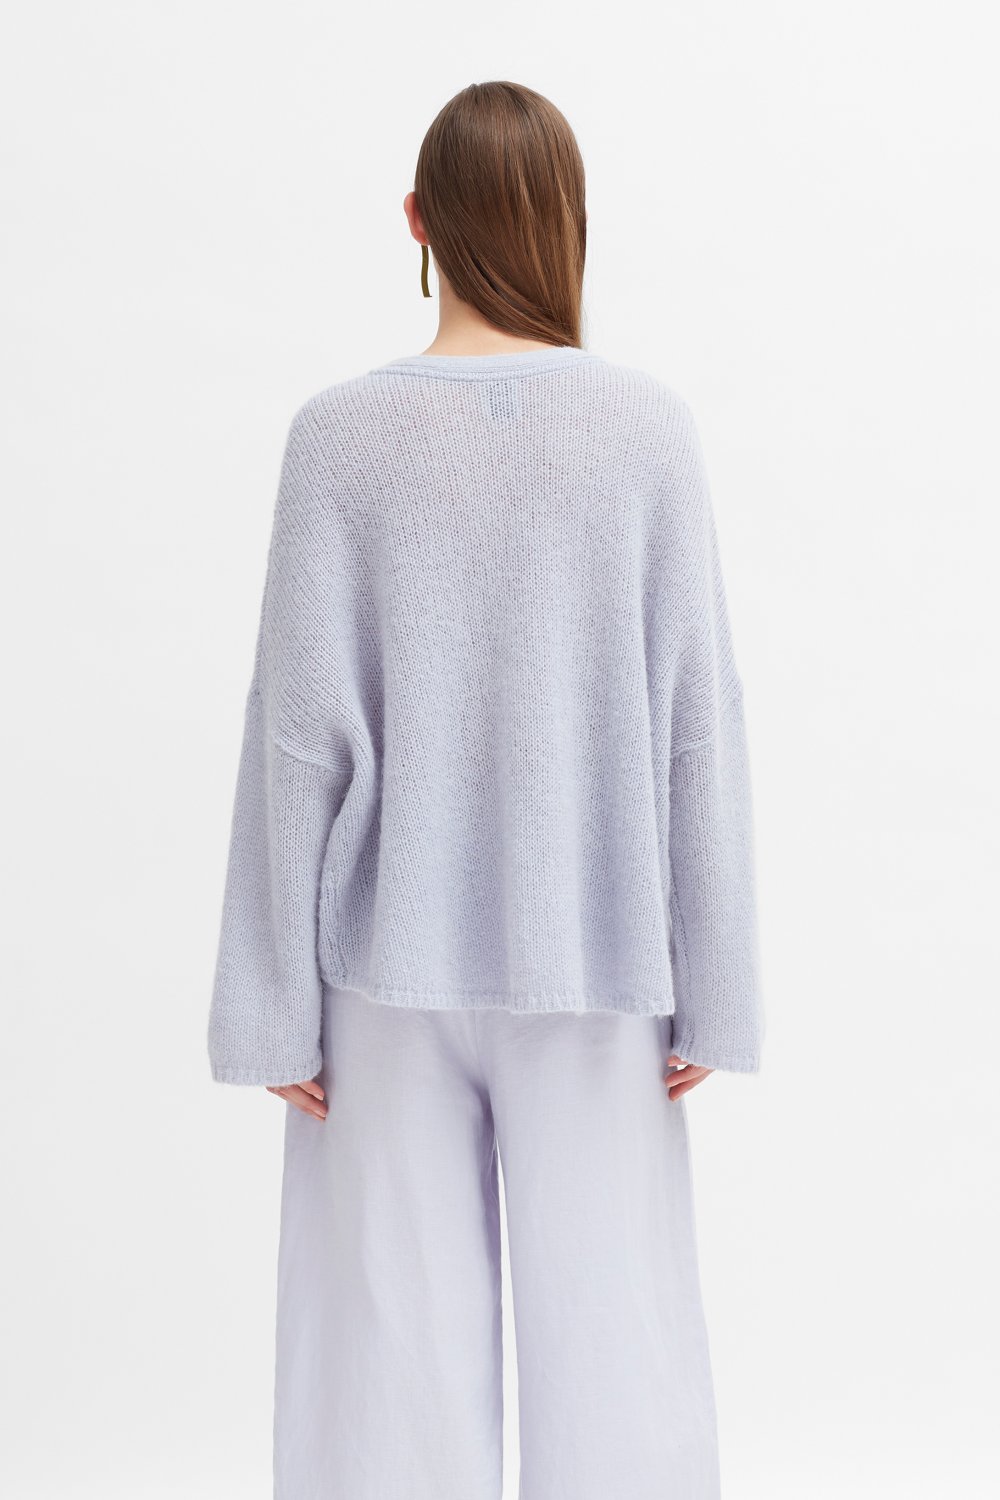 elk-agna-sweater-lilac 3